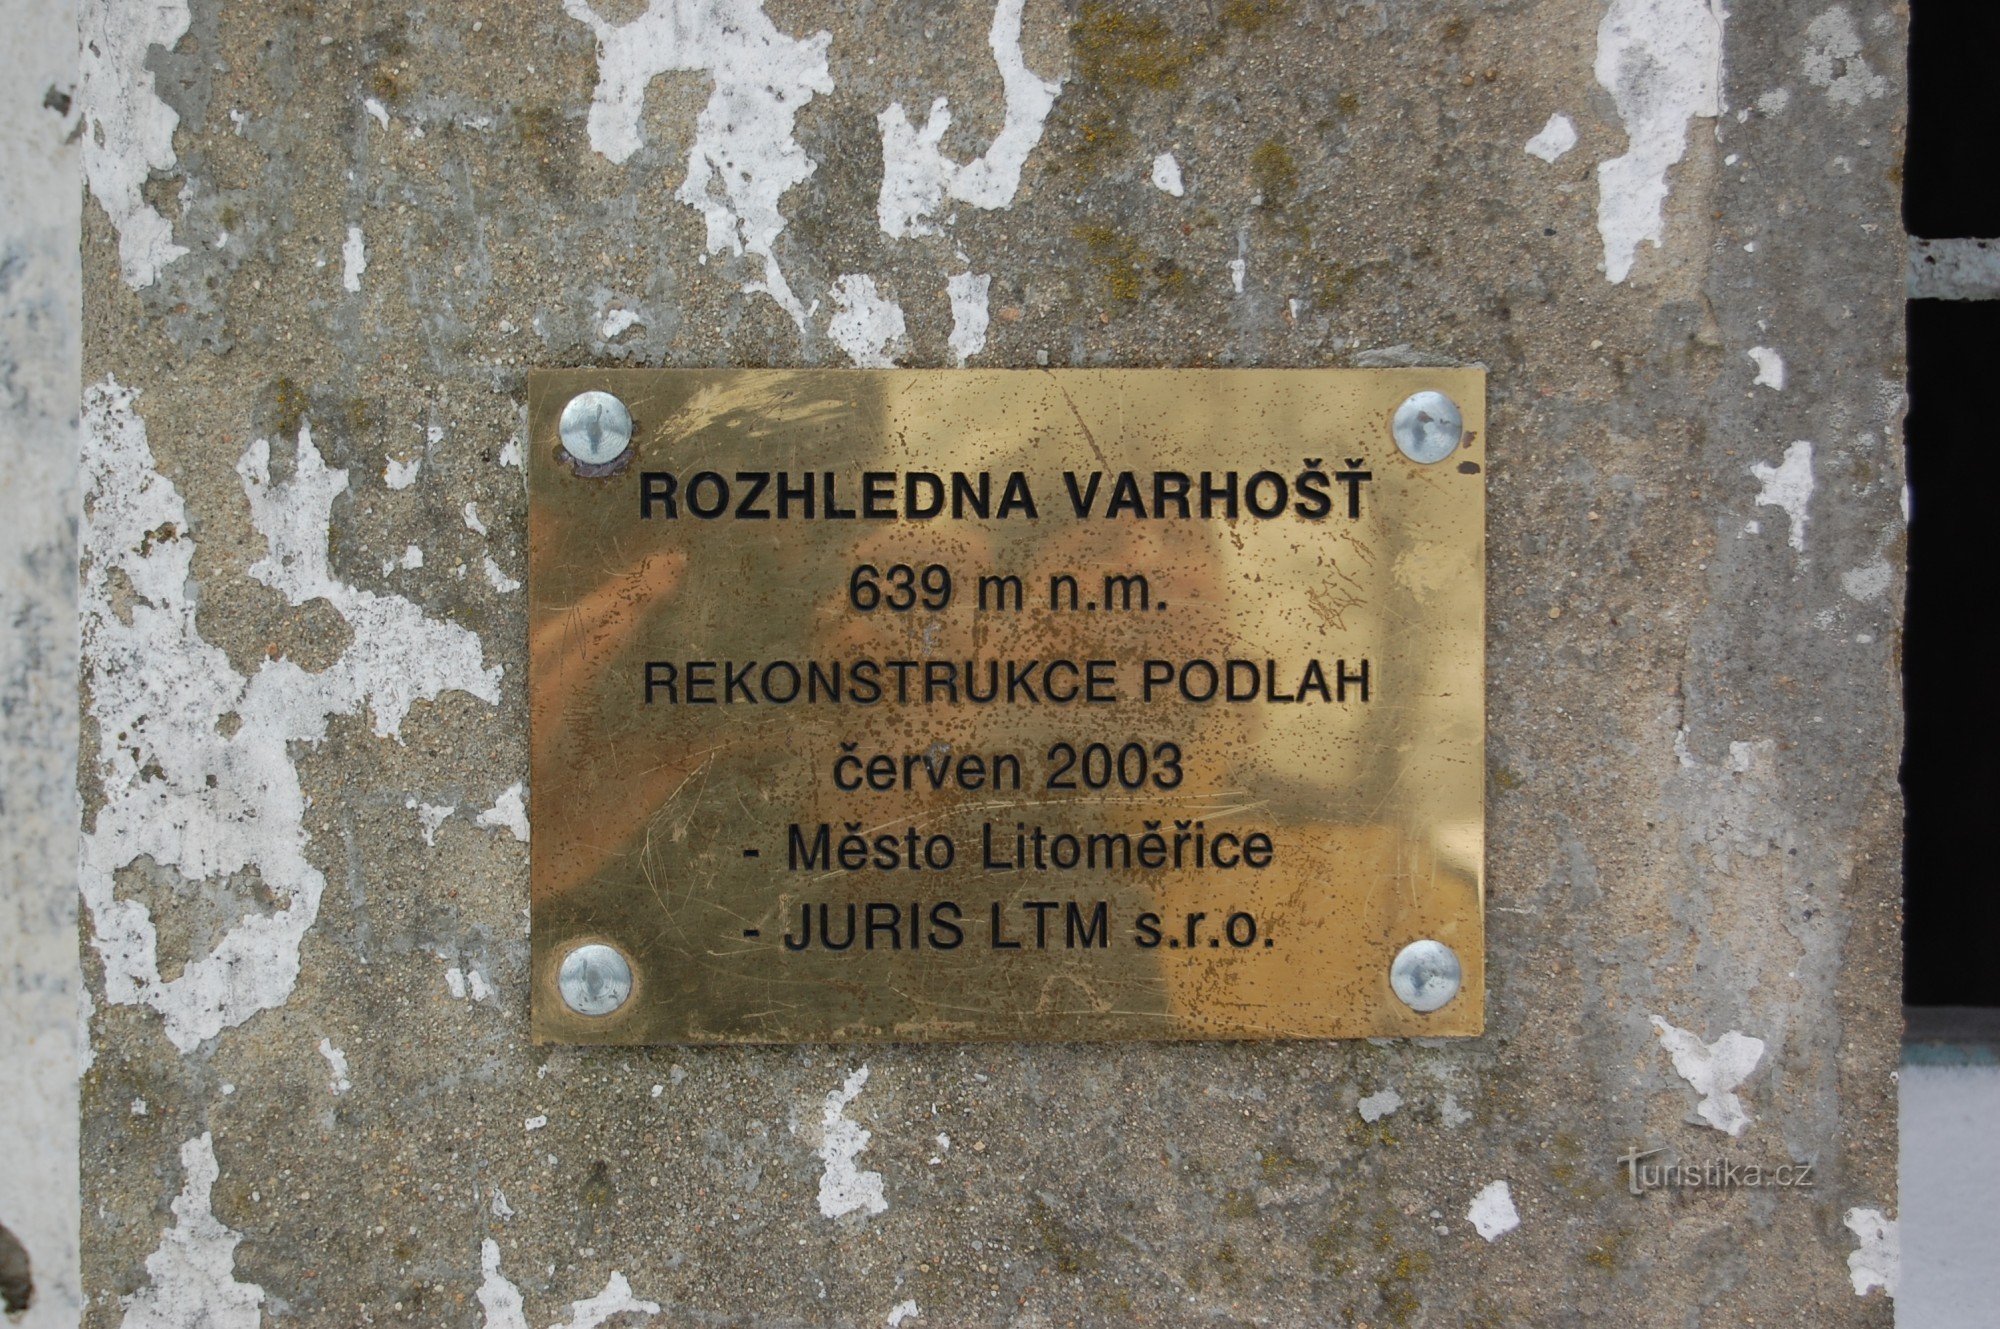 Signo de Varhošť